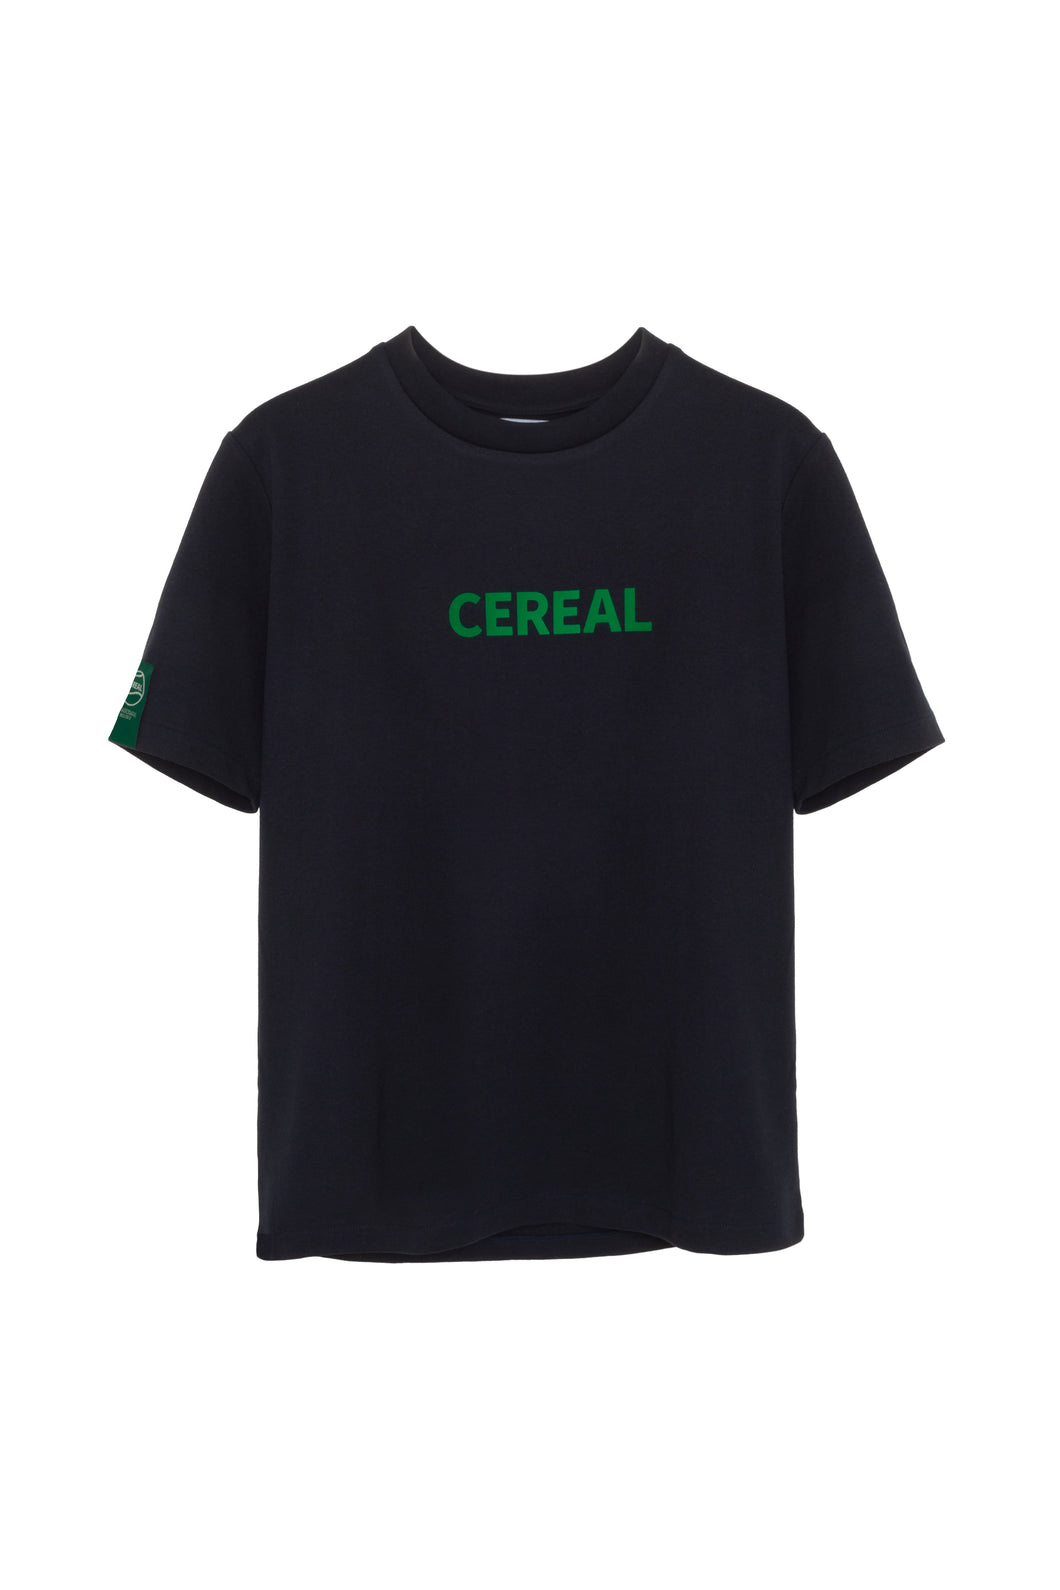 Cereal Logo Tshirt